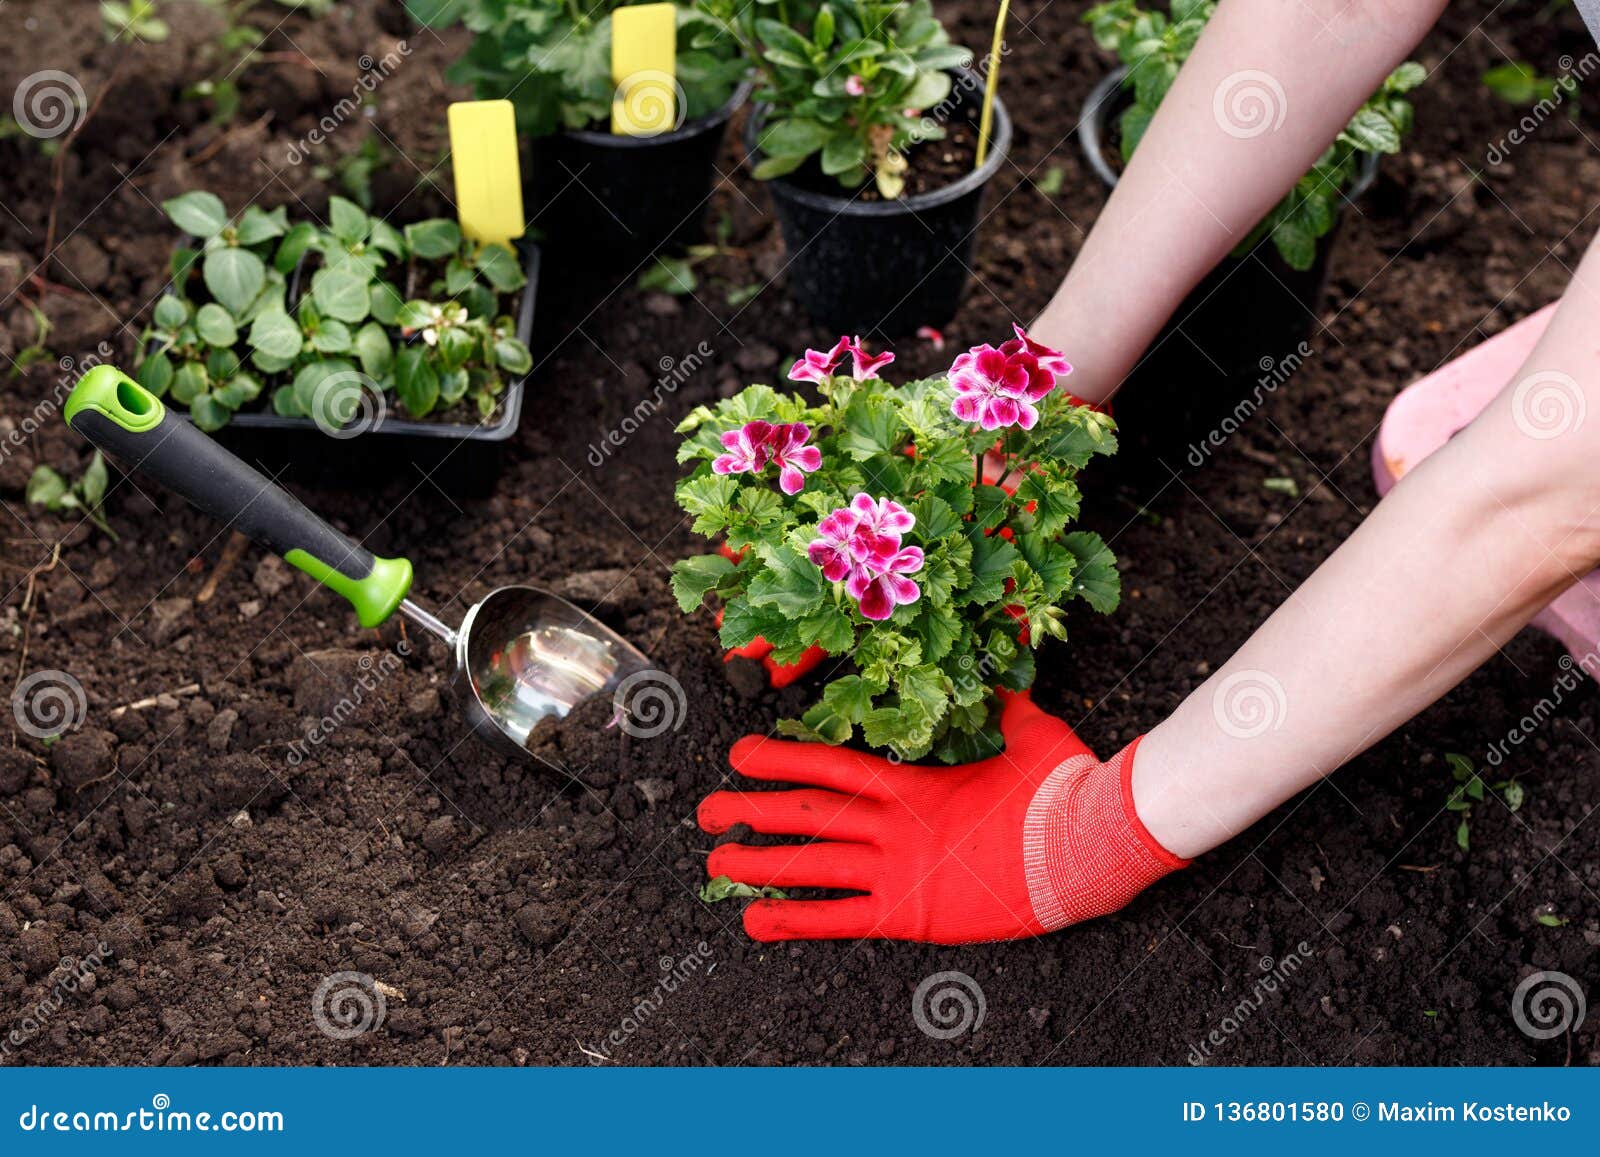 gardener woman planting flowers in her garden, garden maintenance and hobby concept